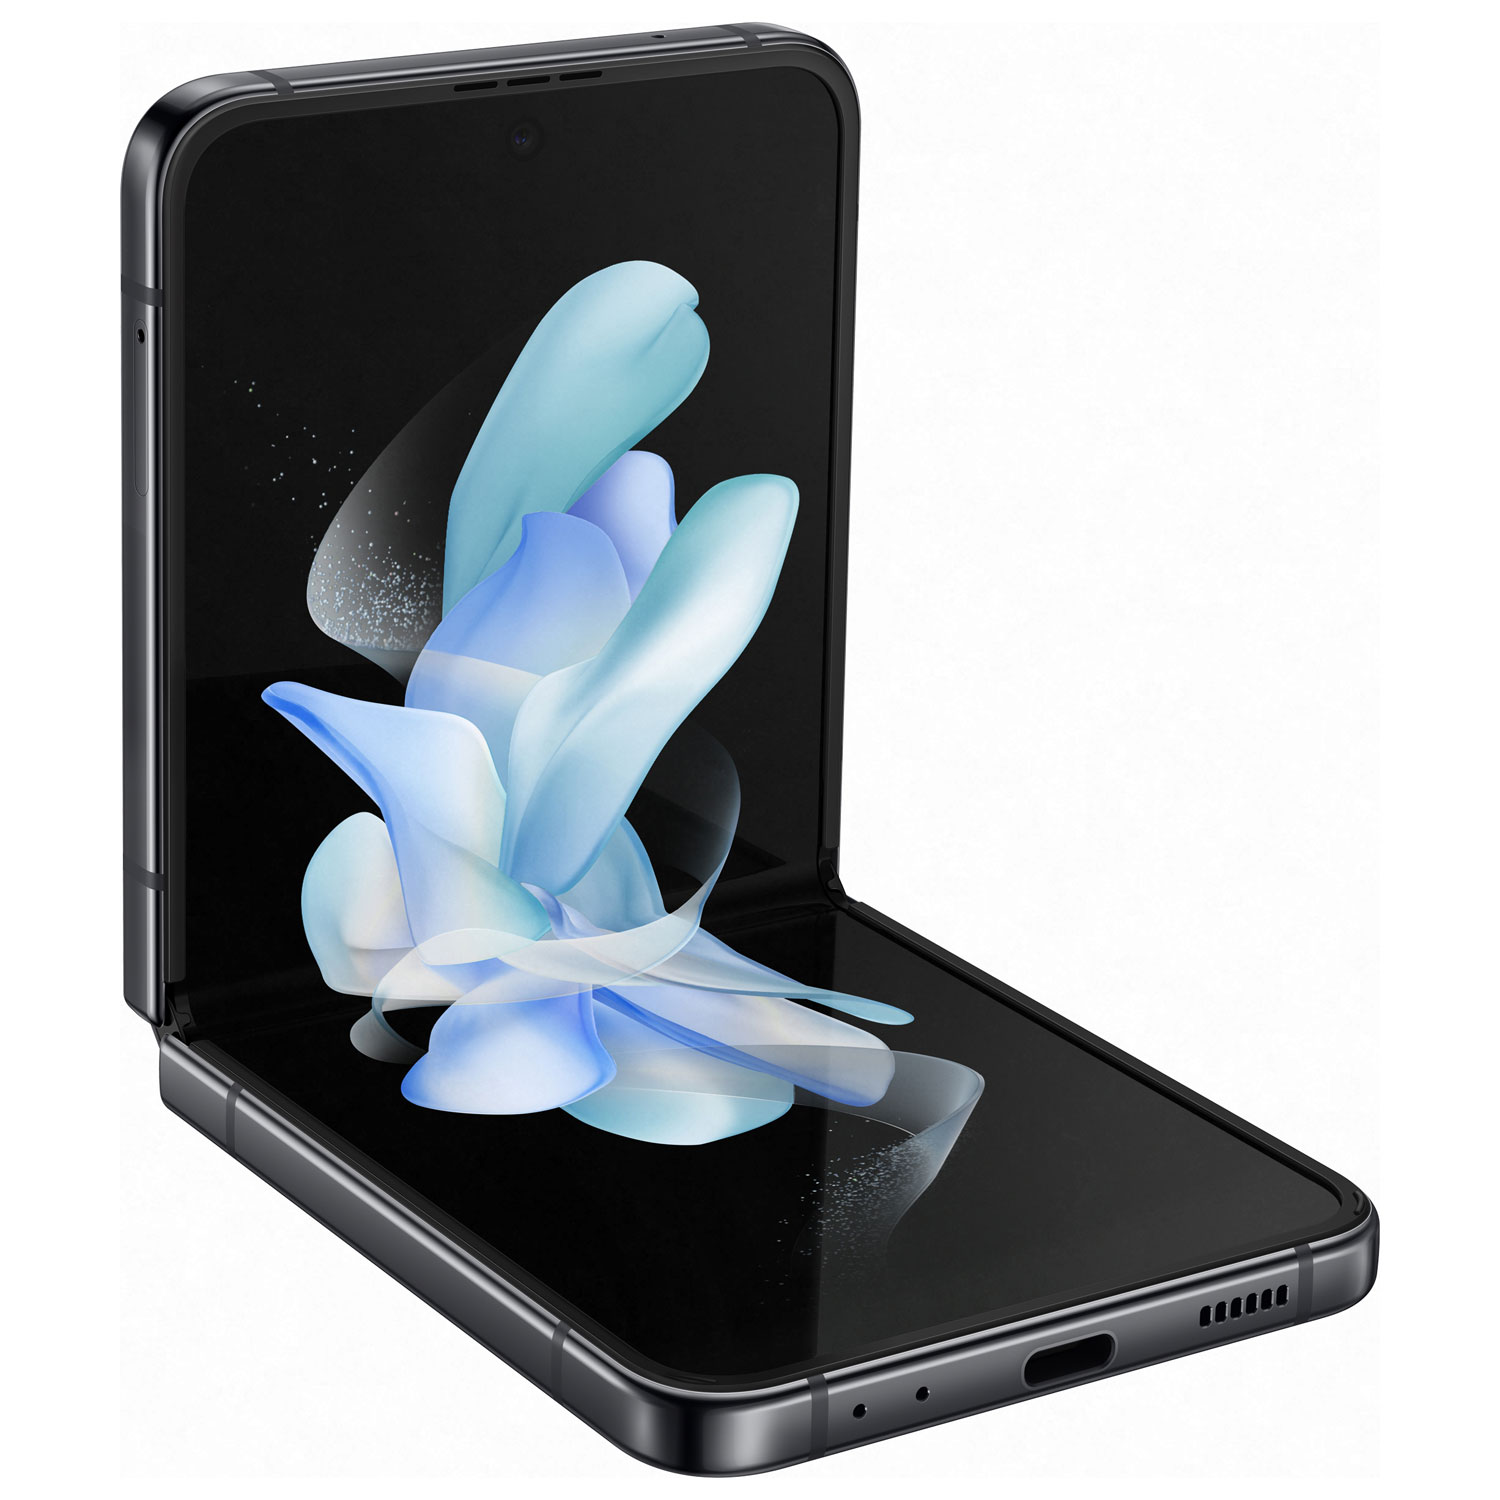 Shaw Samsung Galaxy Z Flip4 5G 128GB - Graphite - Monthly Tab Payment